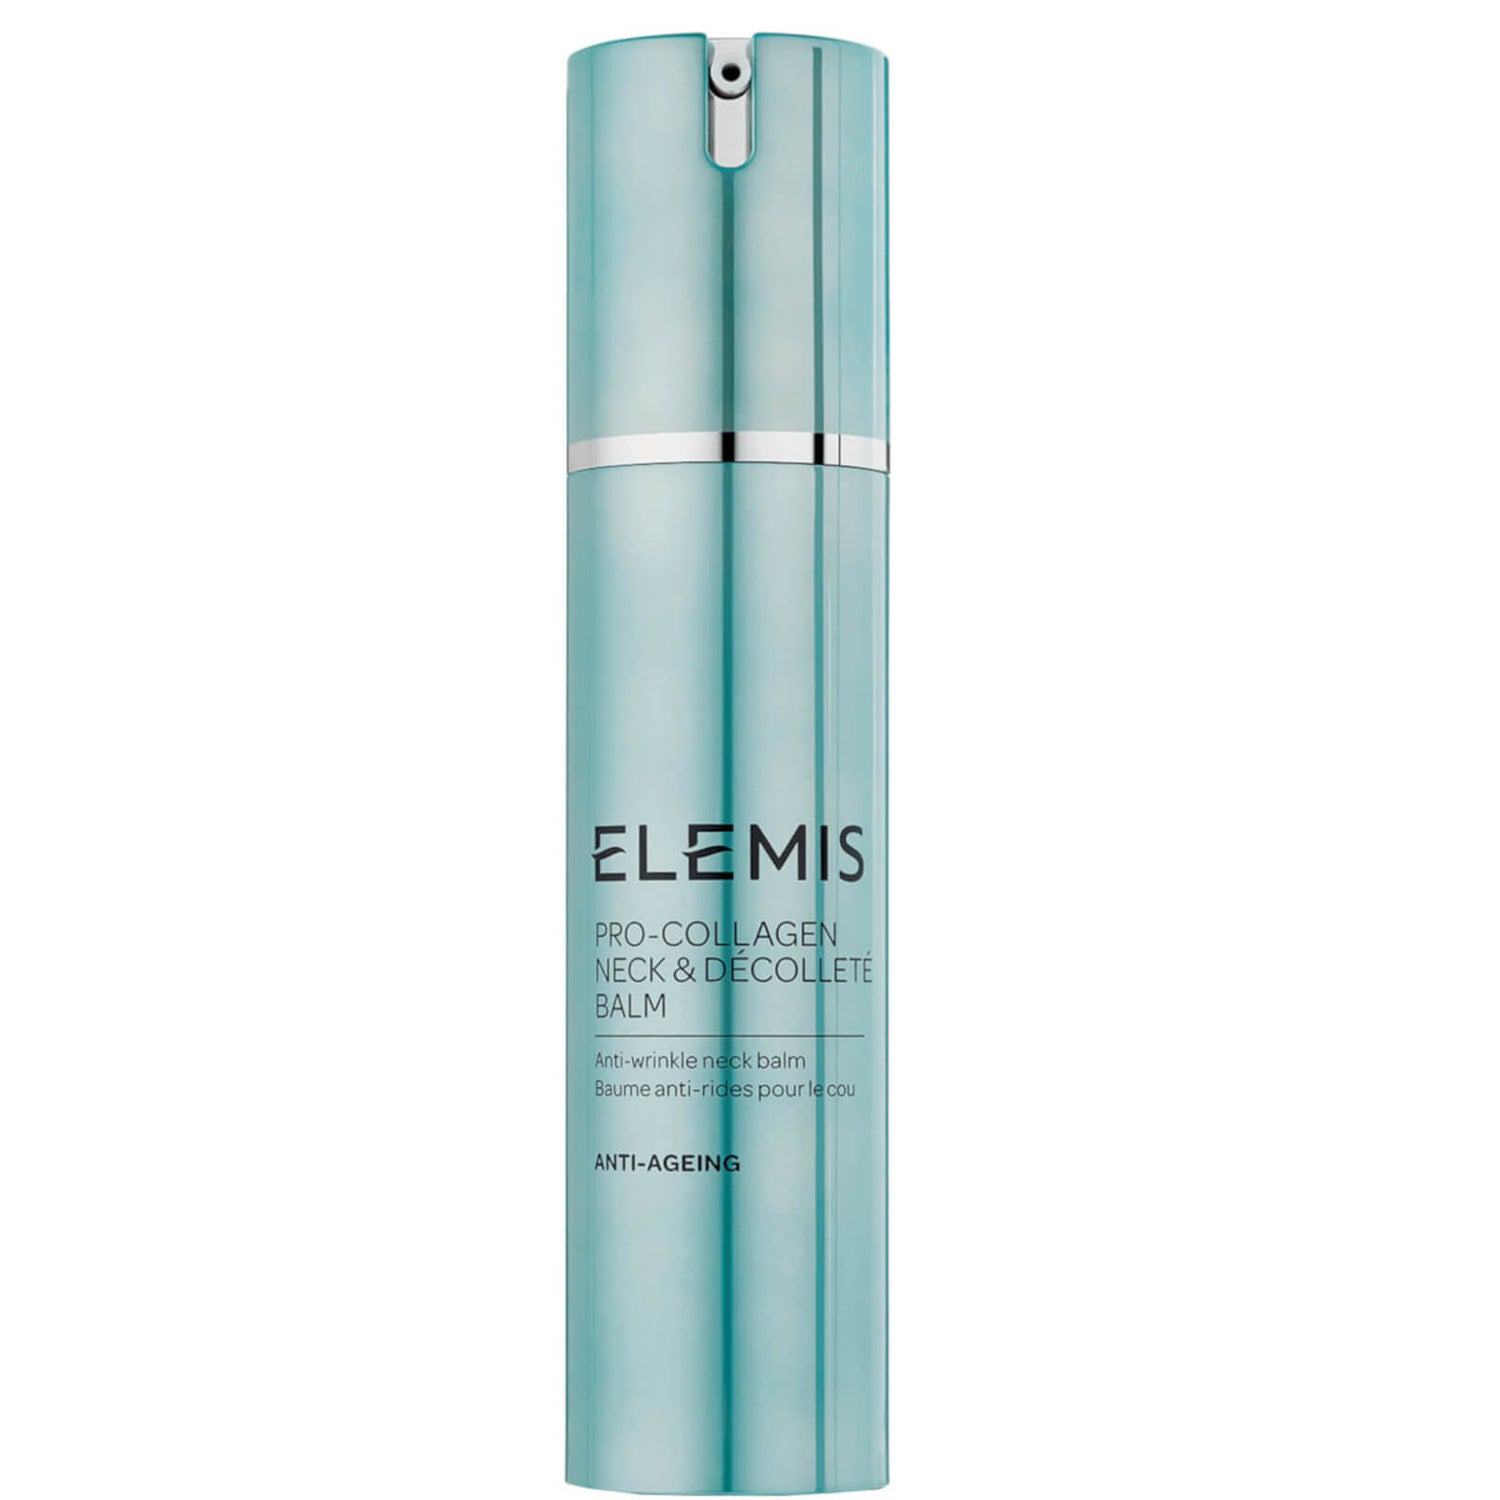 ELEMIS Pro-Collagen Neck and Decollete Balm (1.6 oz.)